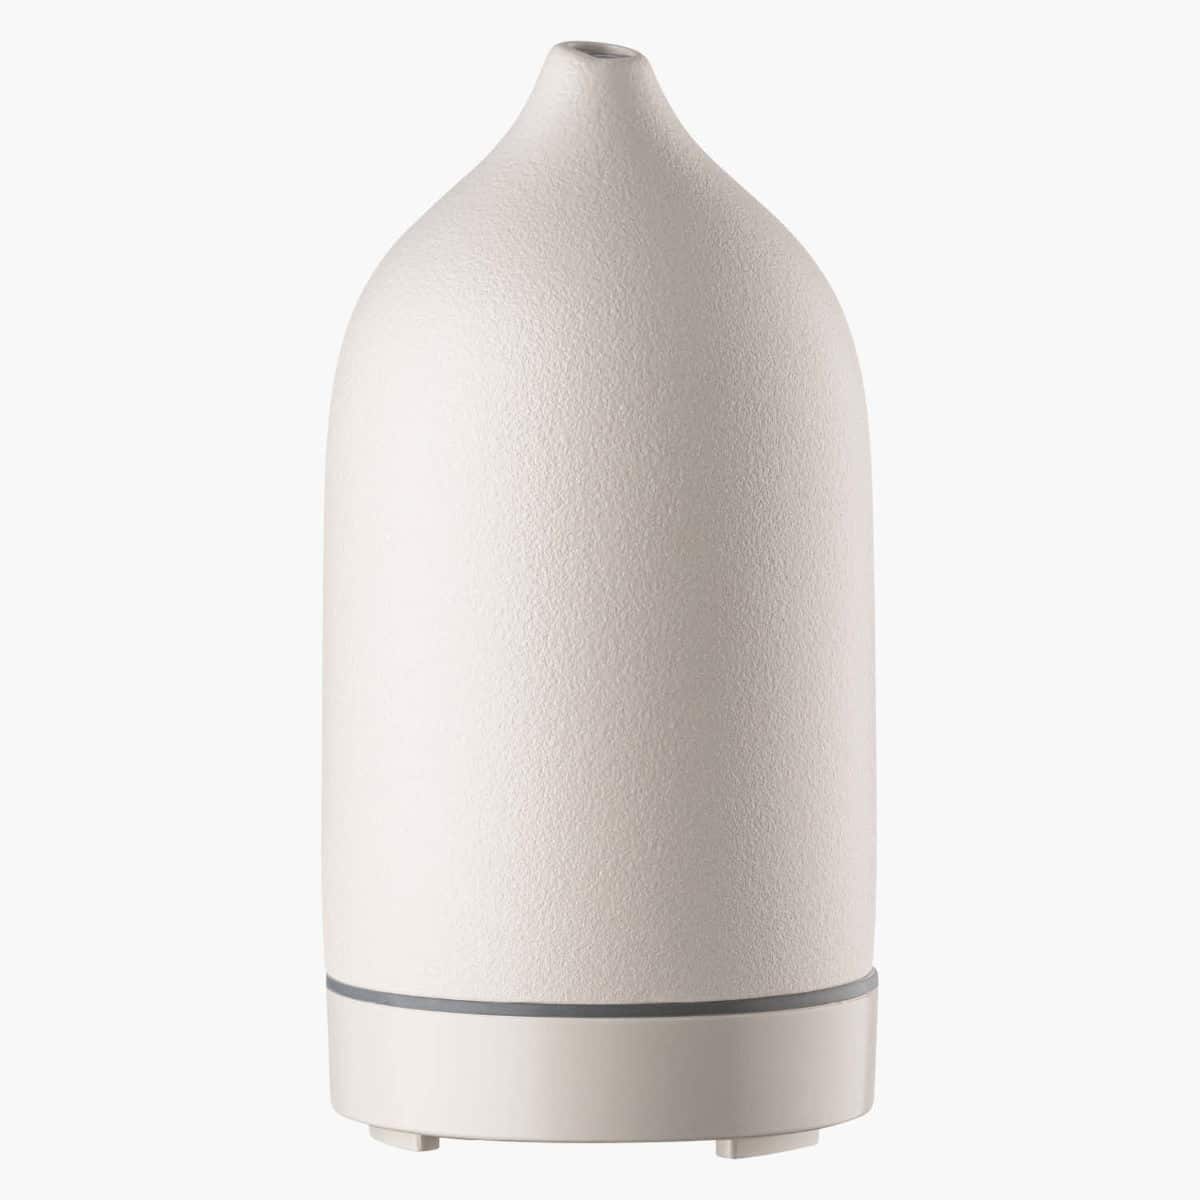 Ceramic Aroma Diffuser White with LED